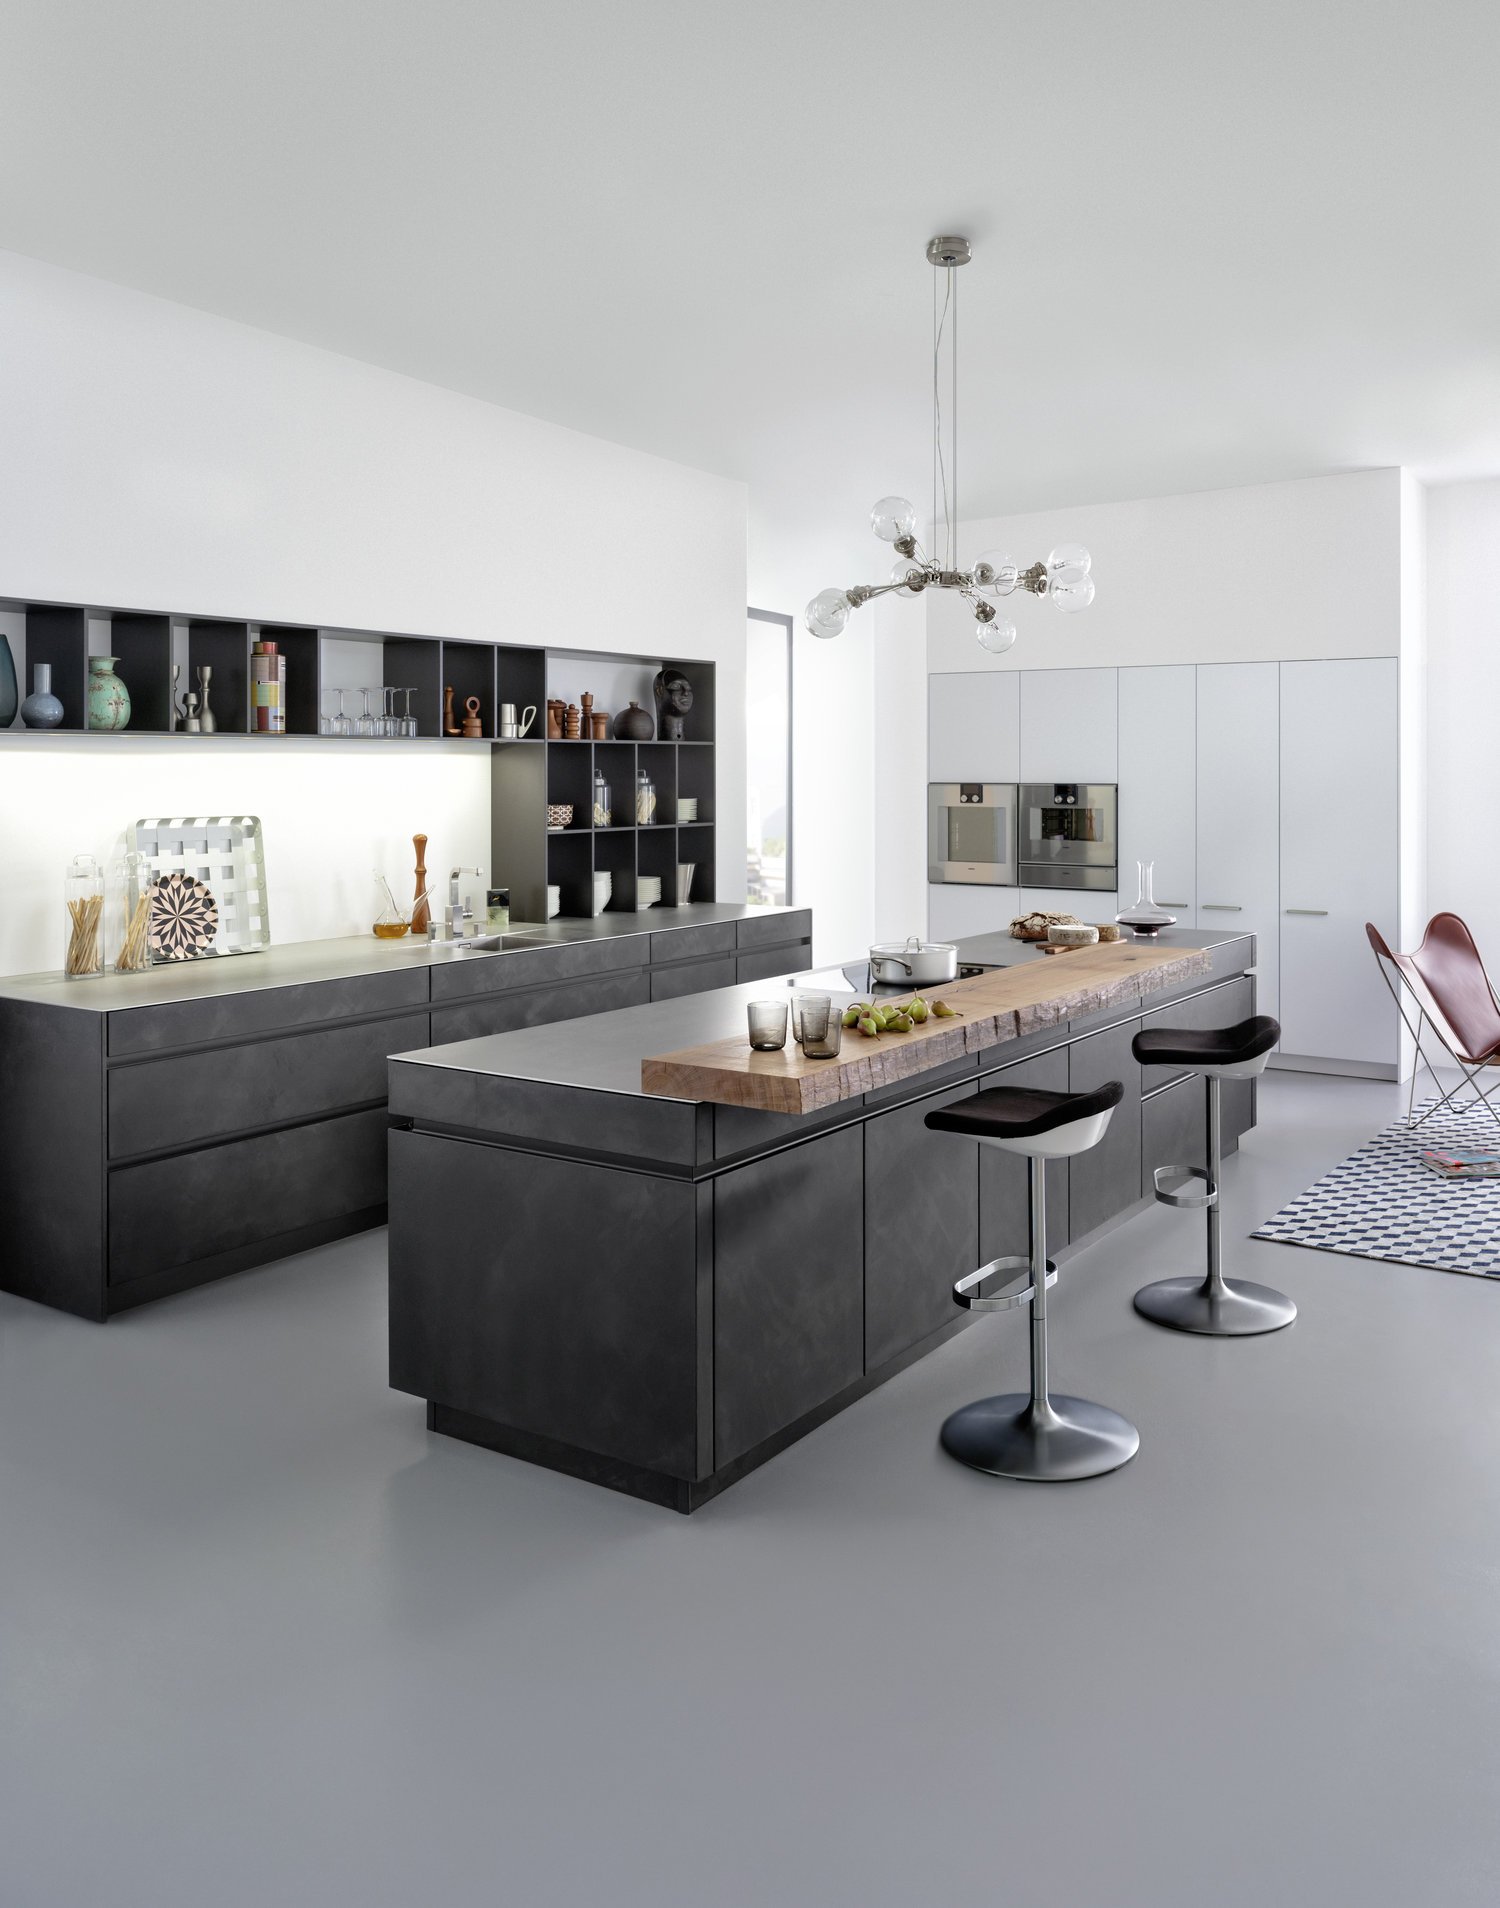 CONCRETE-A leicht connaught kitchens open plan with kitchen island.jpg